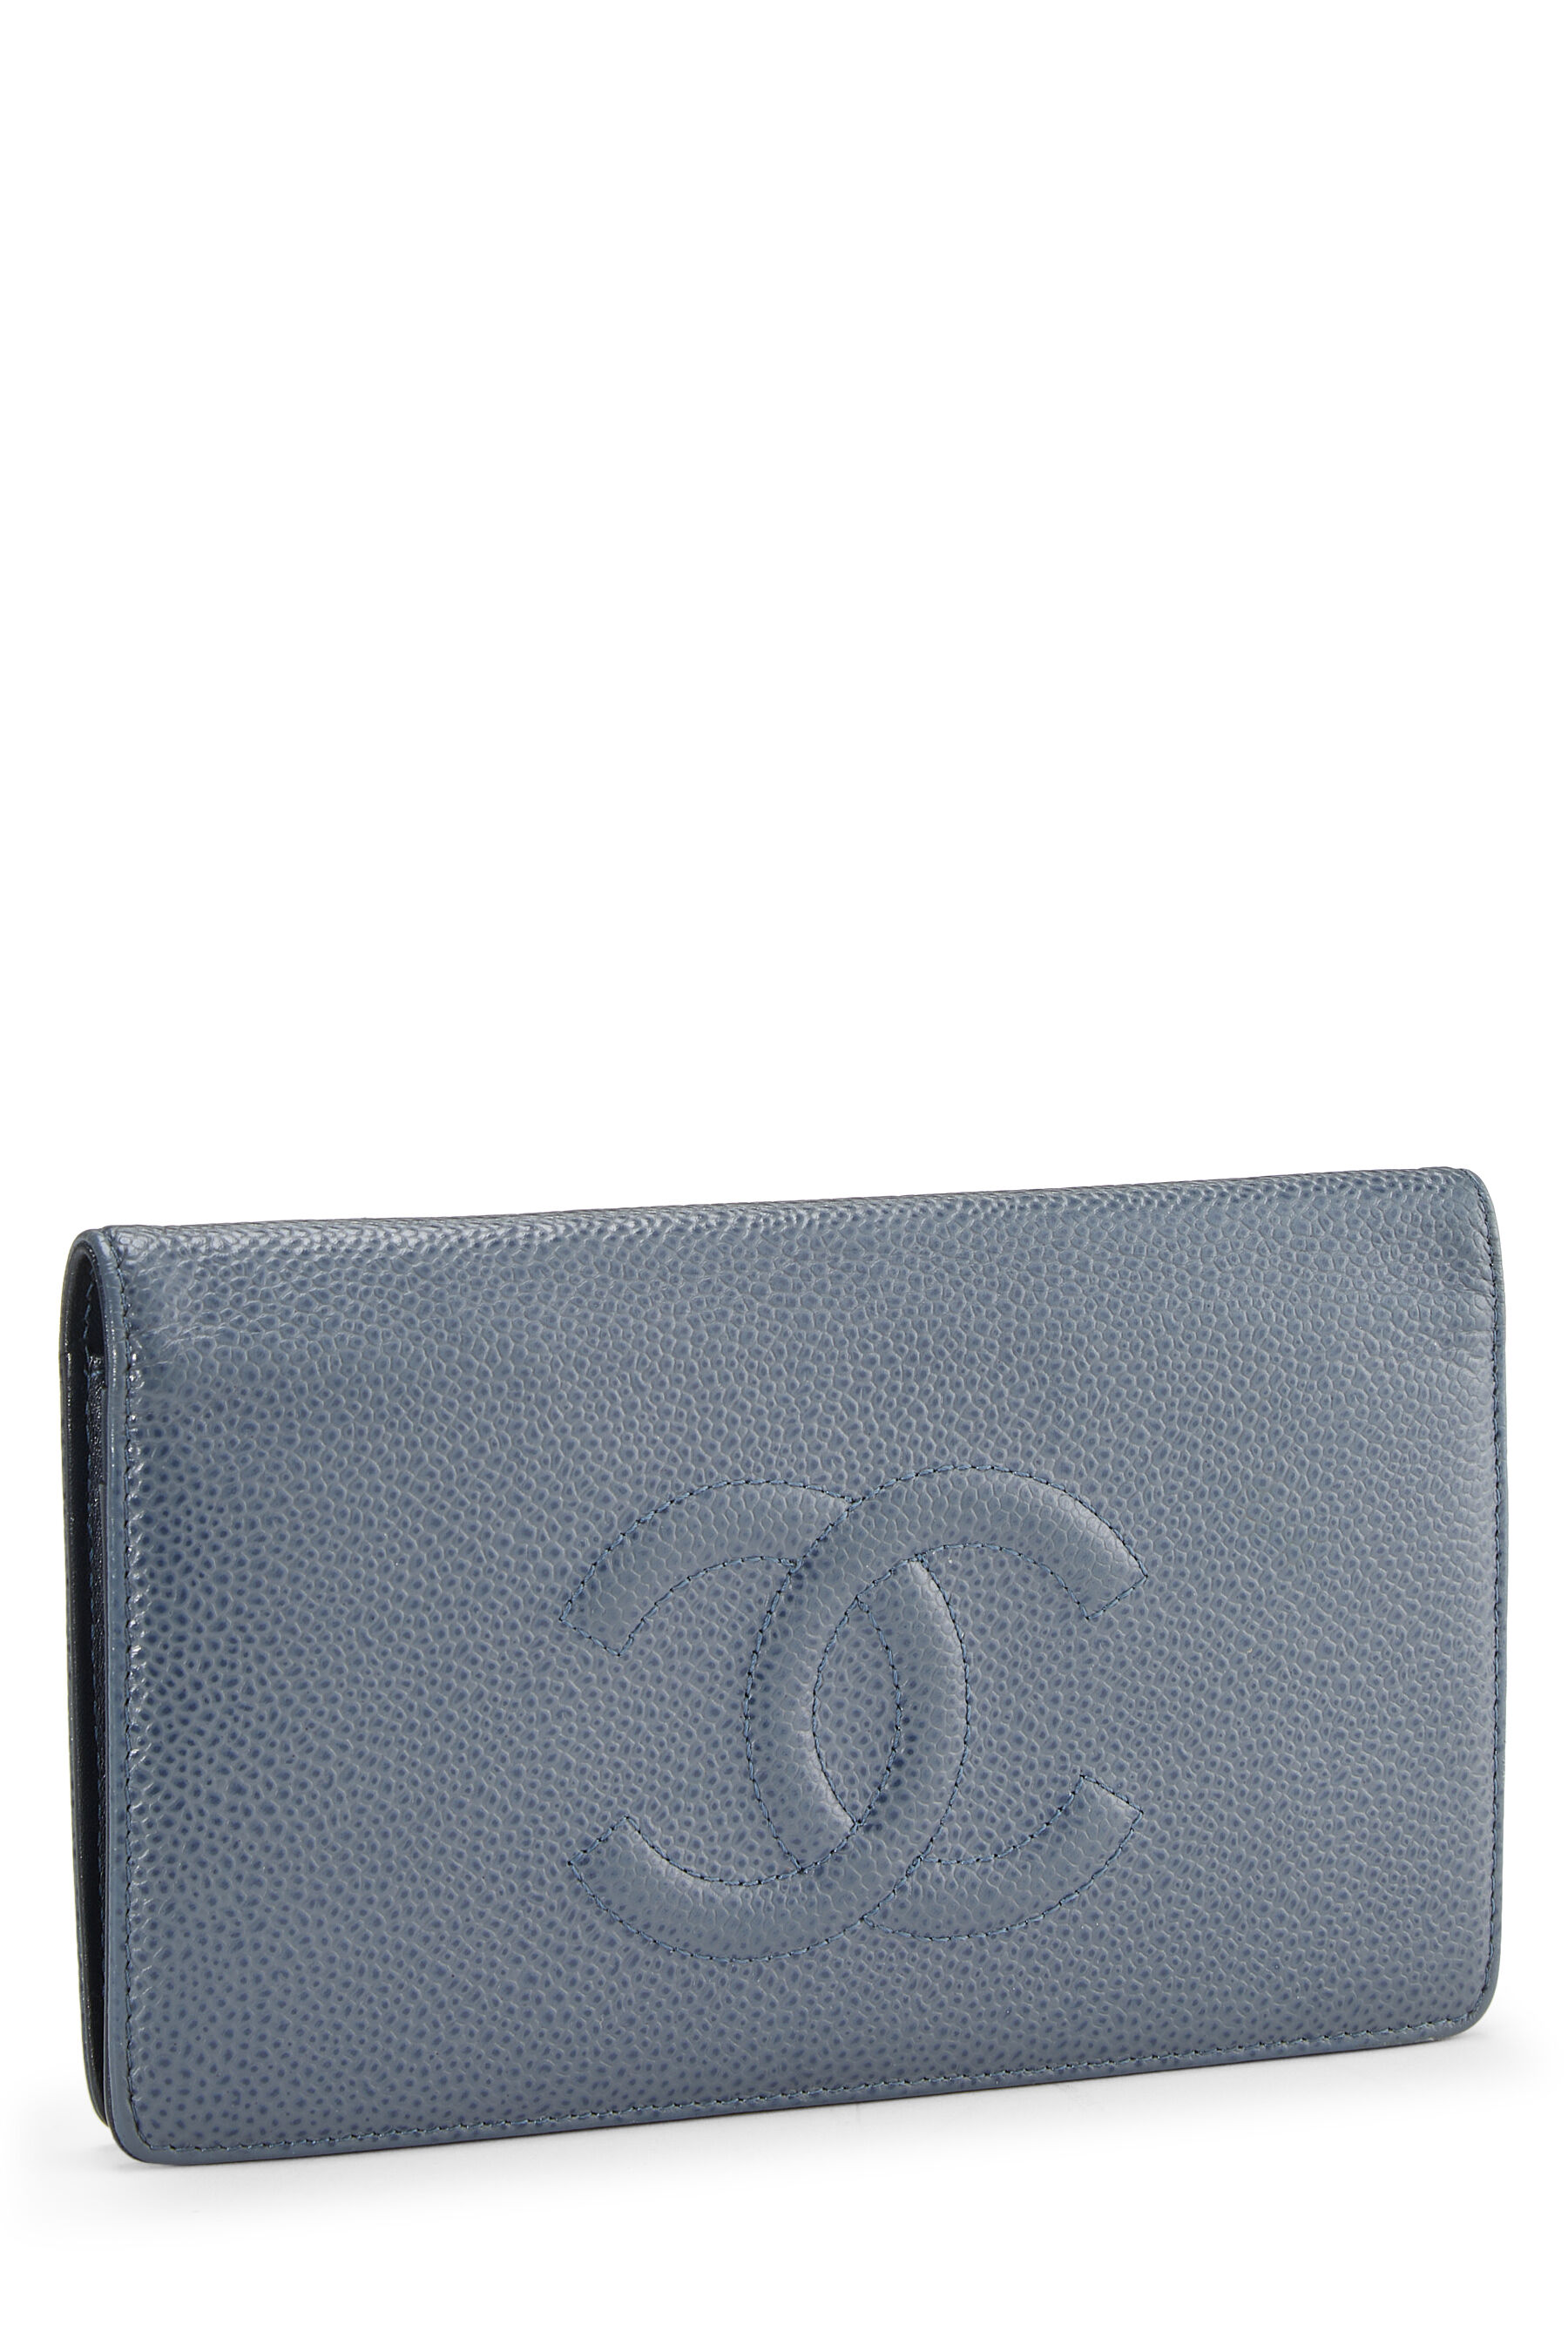 Chanel Large Blue Caviar CC Logo Timeless Flap Wallet 819ca78